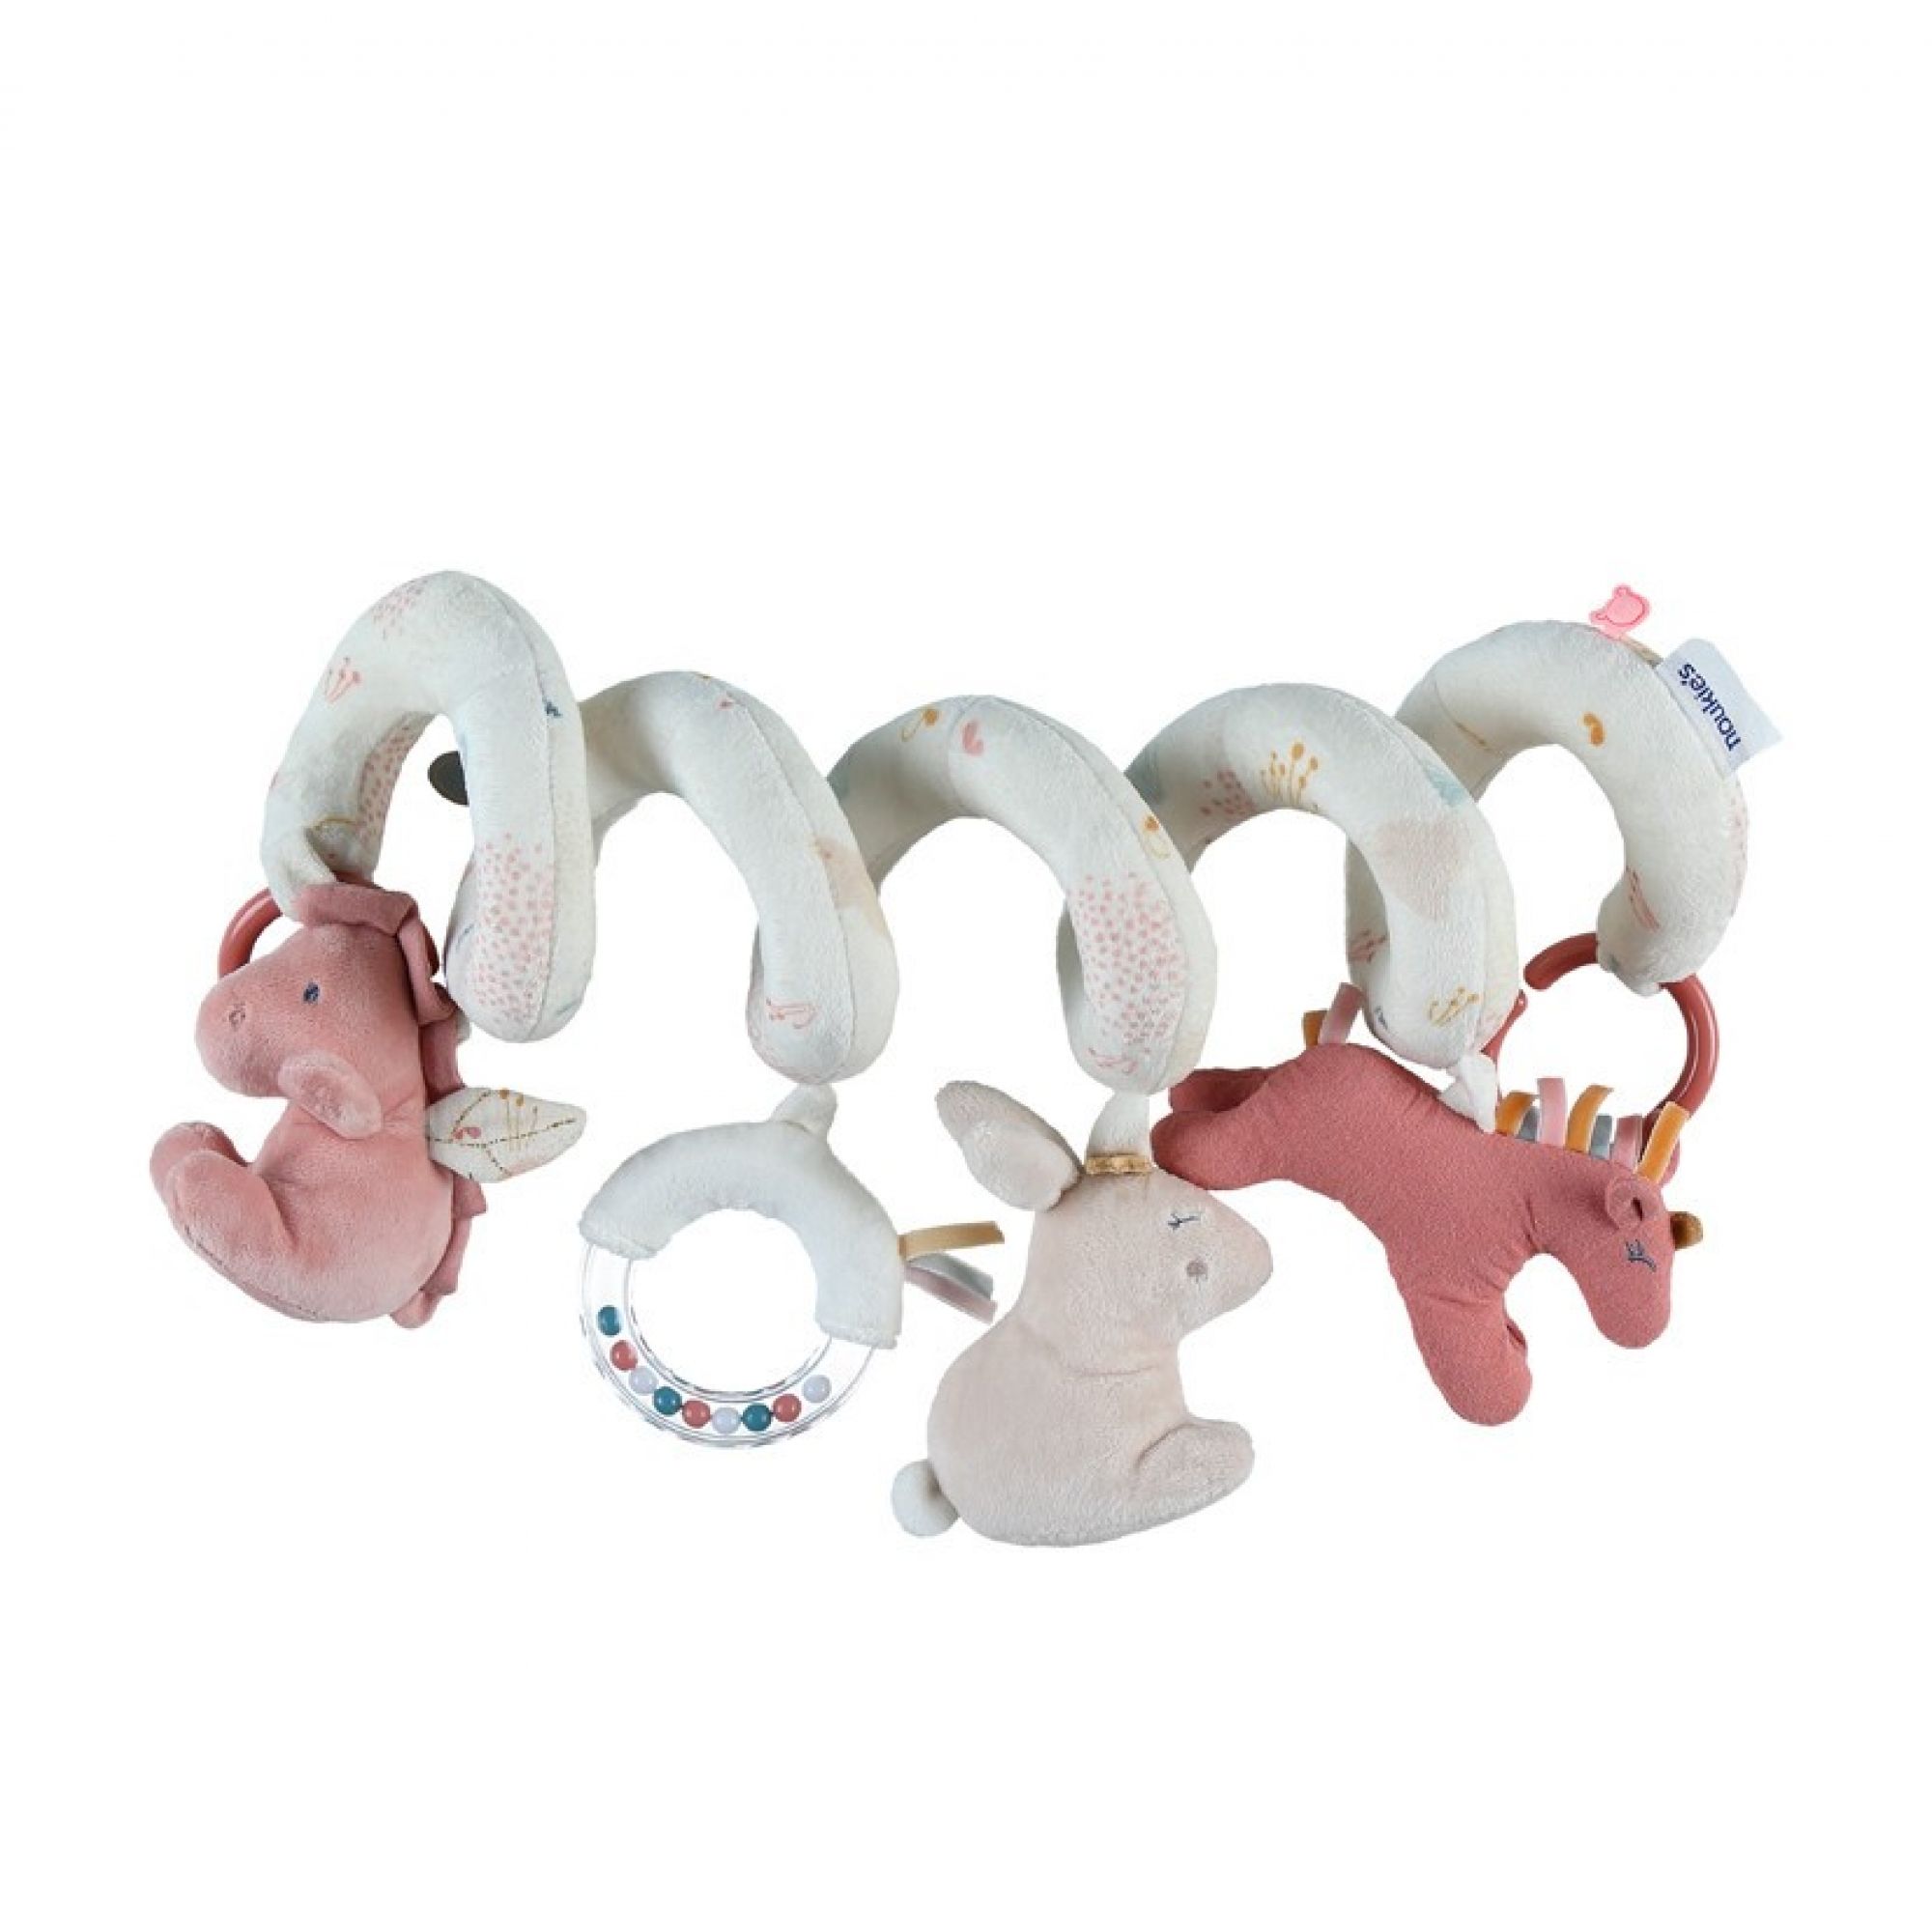 Spirale D Activites Veloudoux Multicolore Made In Bebe